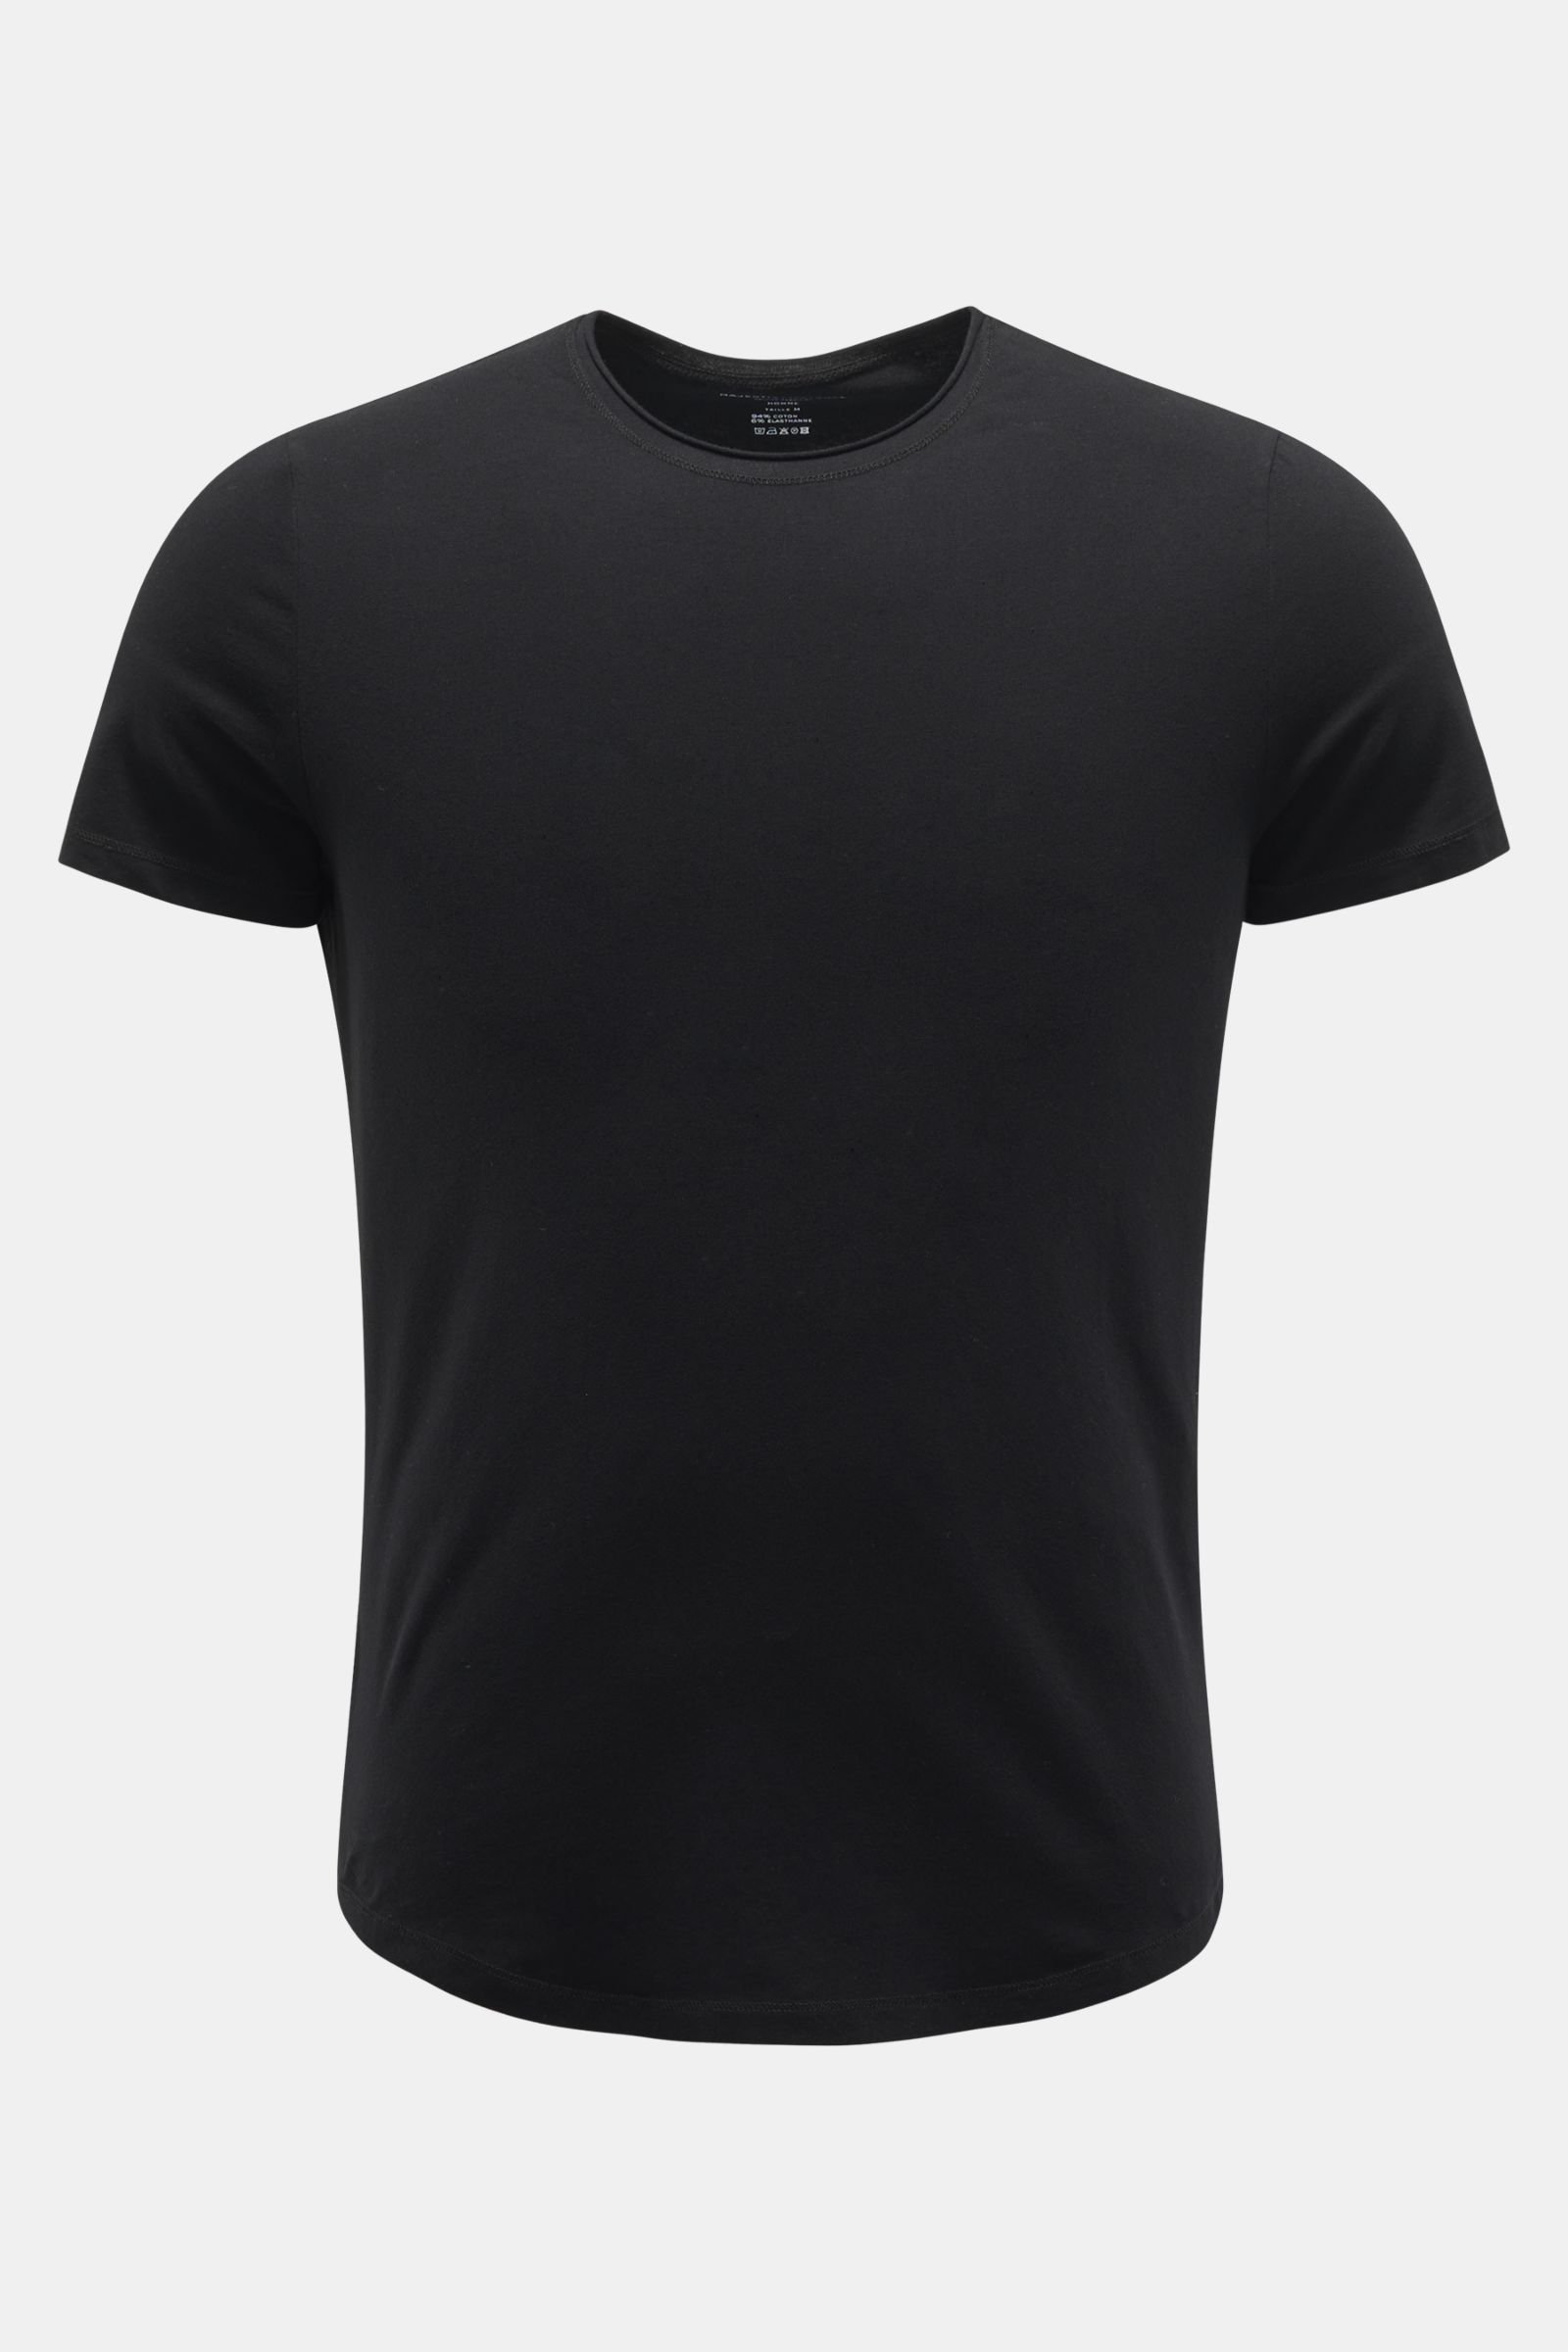 Crew neck T-shirt black